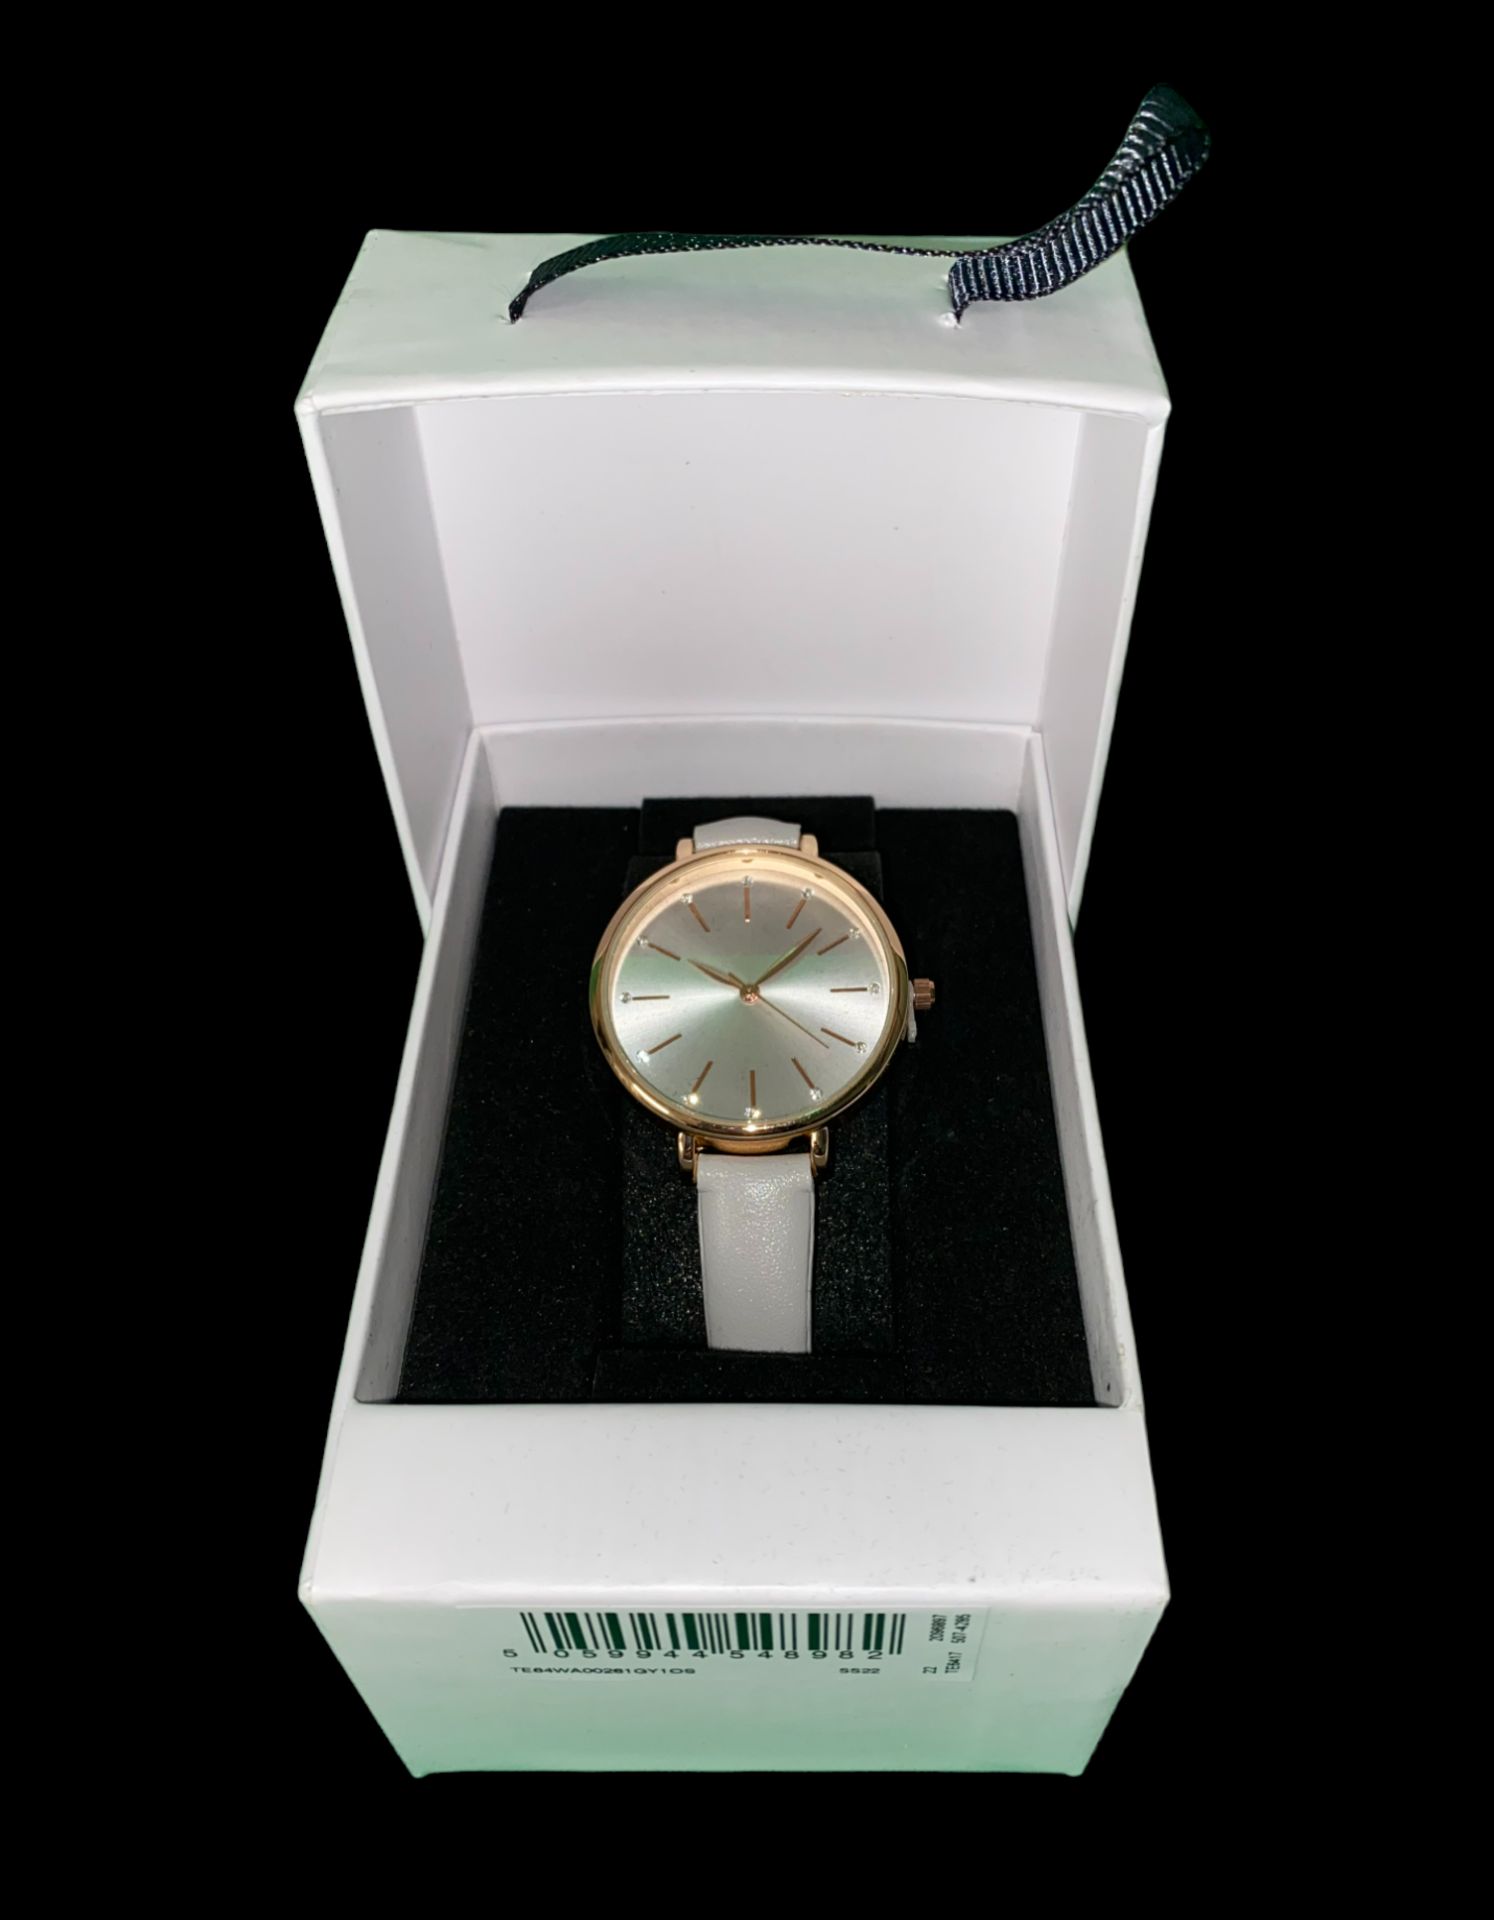 10 x Unisex Quartz Wrist Watch - Grey Strap